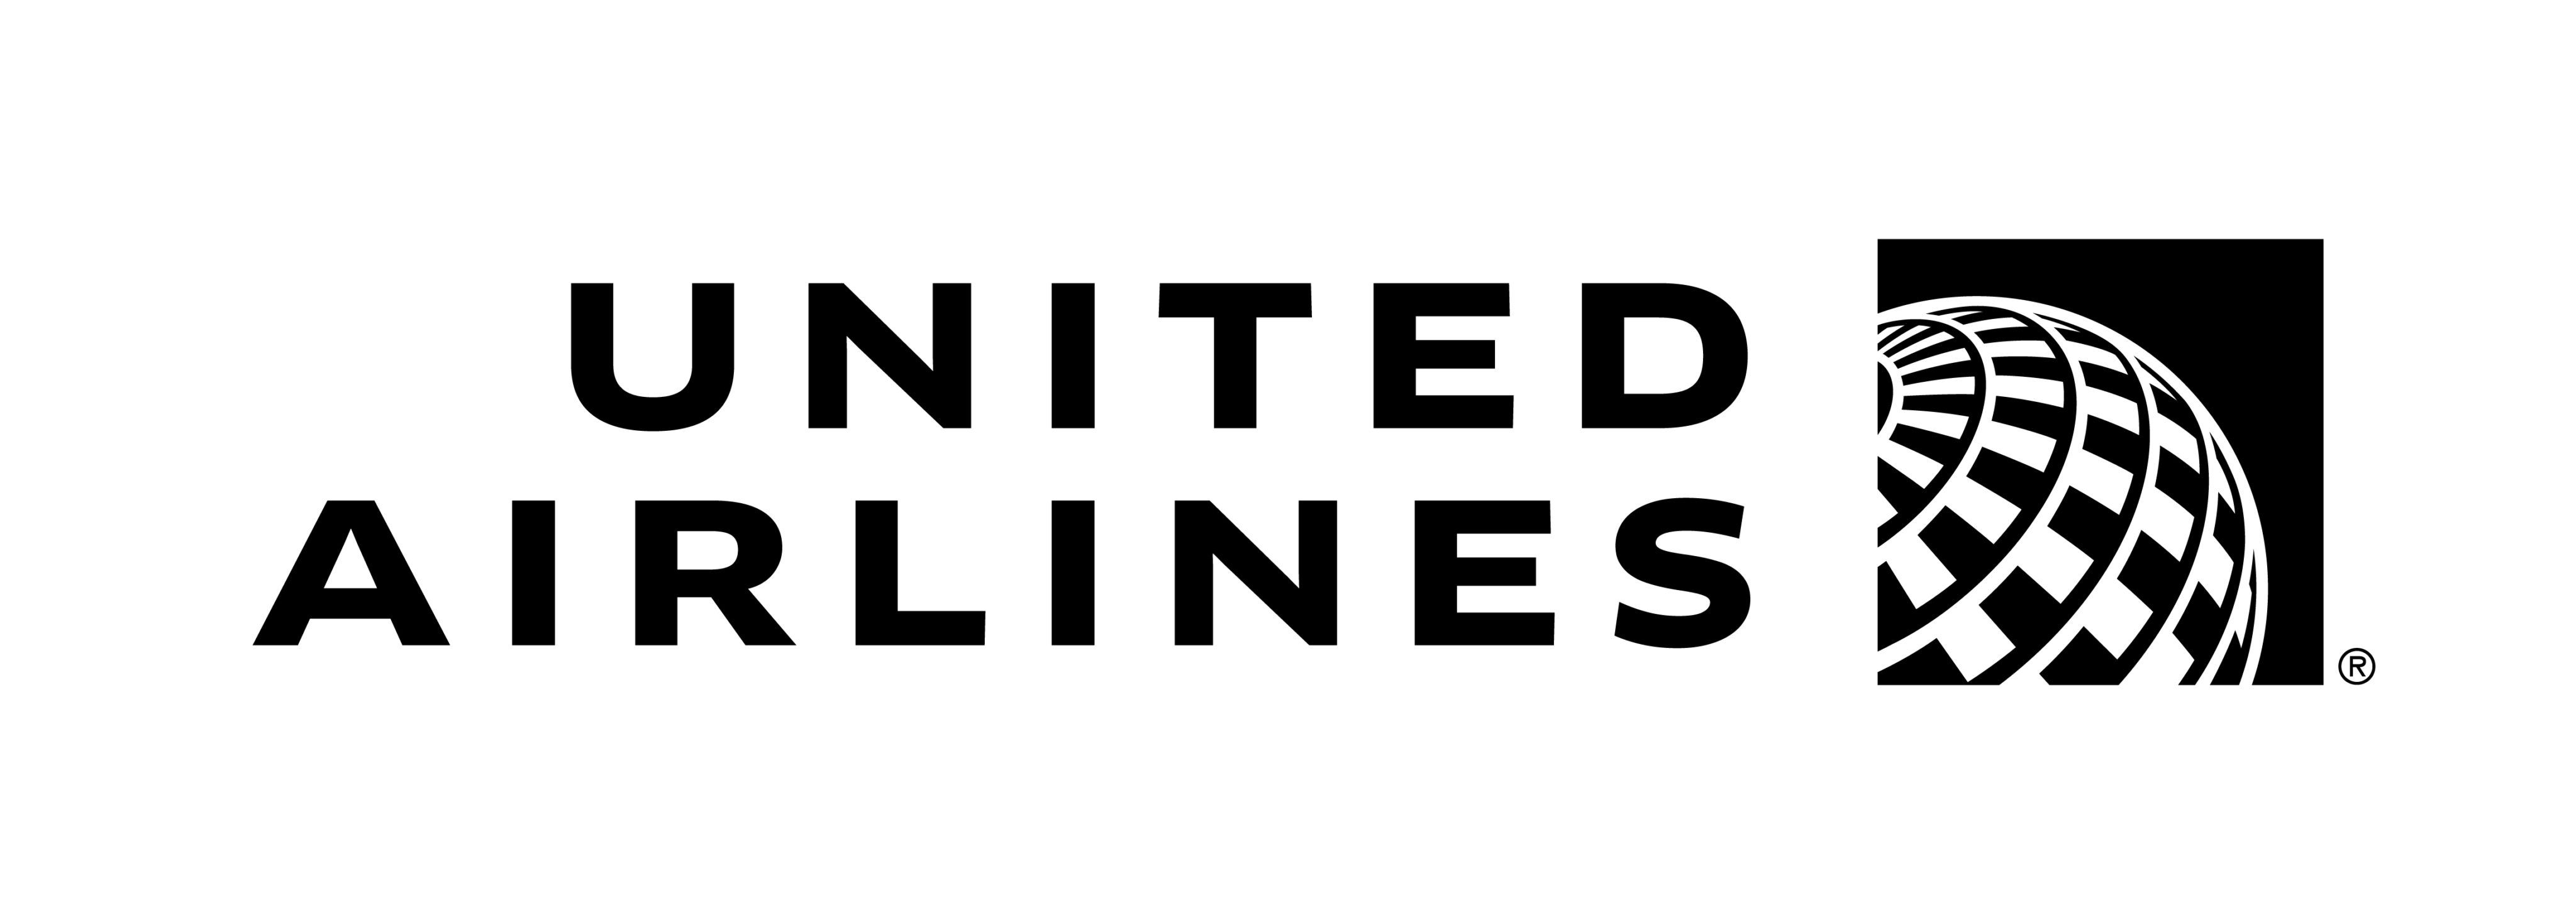 DPS Foundation United Airlines - Denver Public Schools Foundation